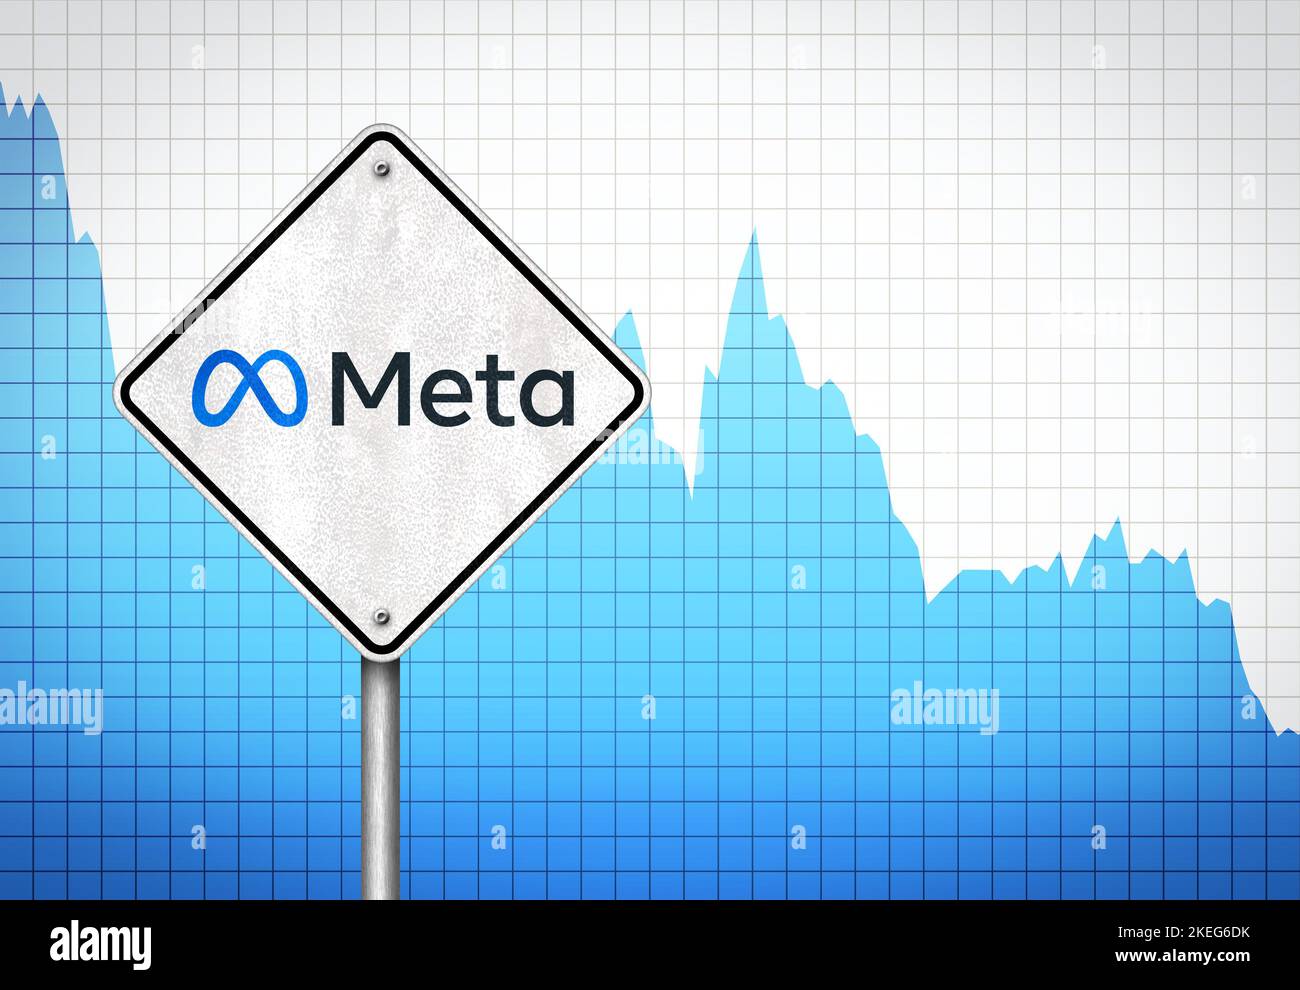 Meta Platforms stock market Stock Photo